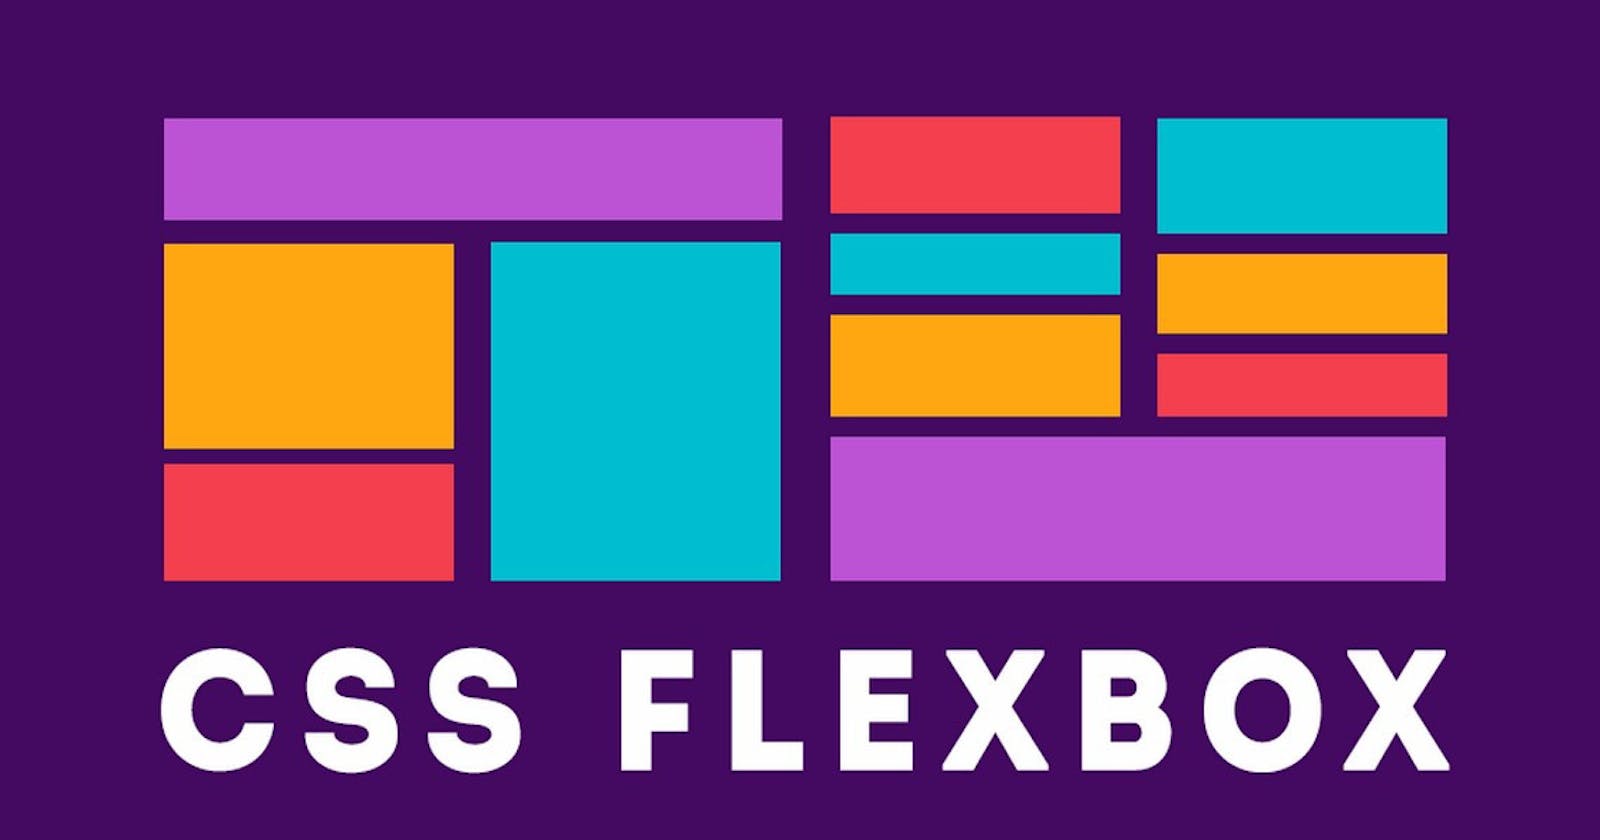 Flexbox and It's Properties